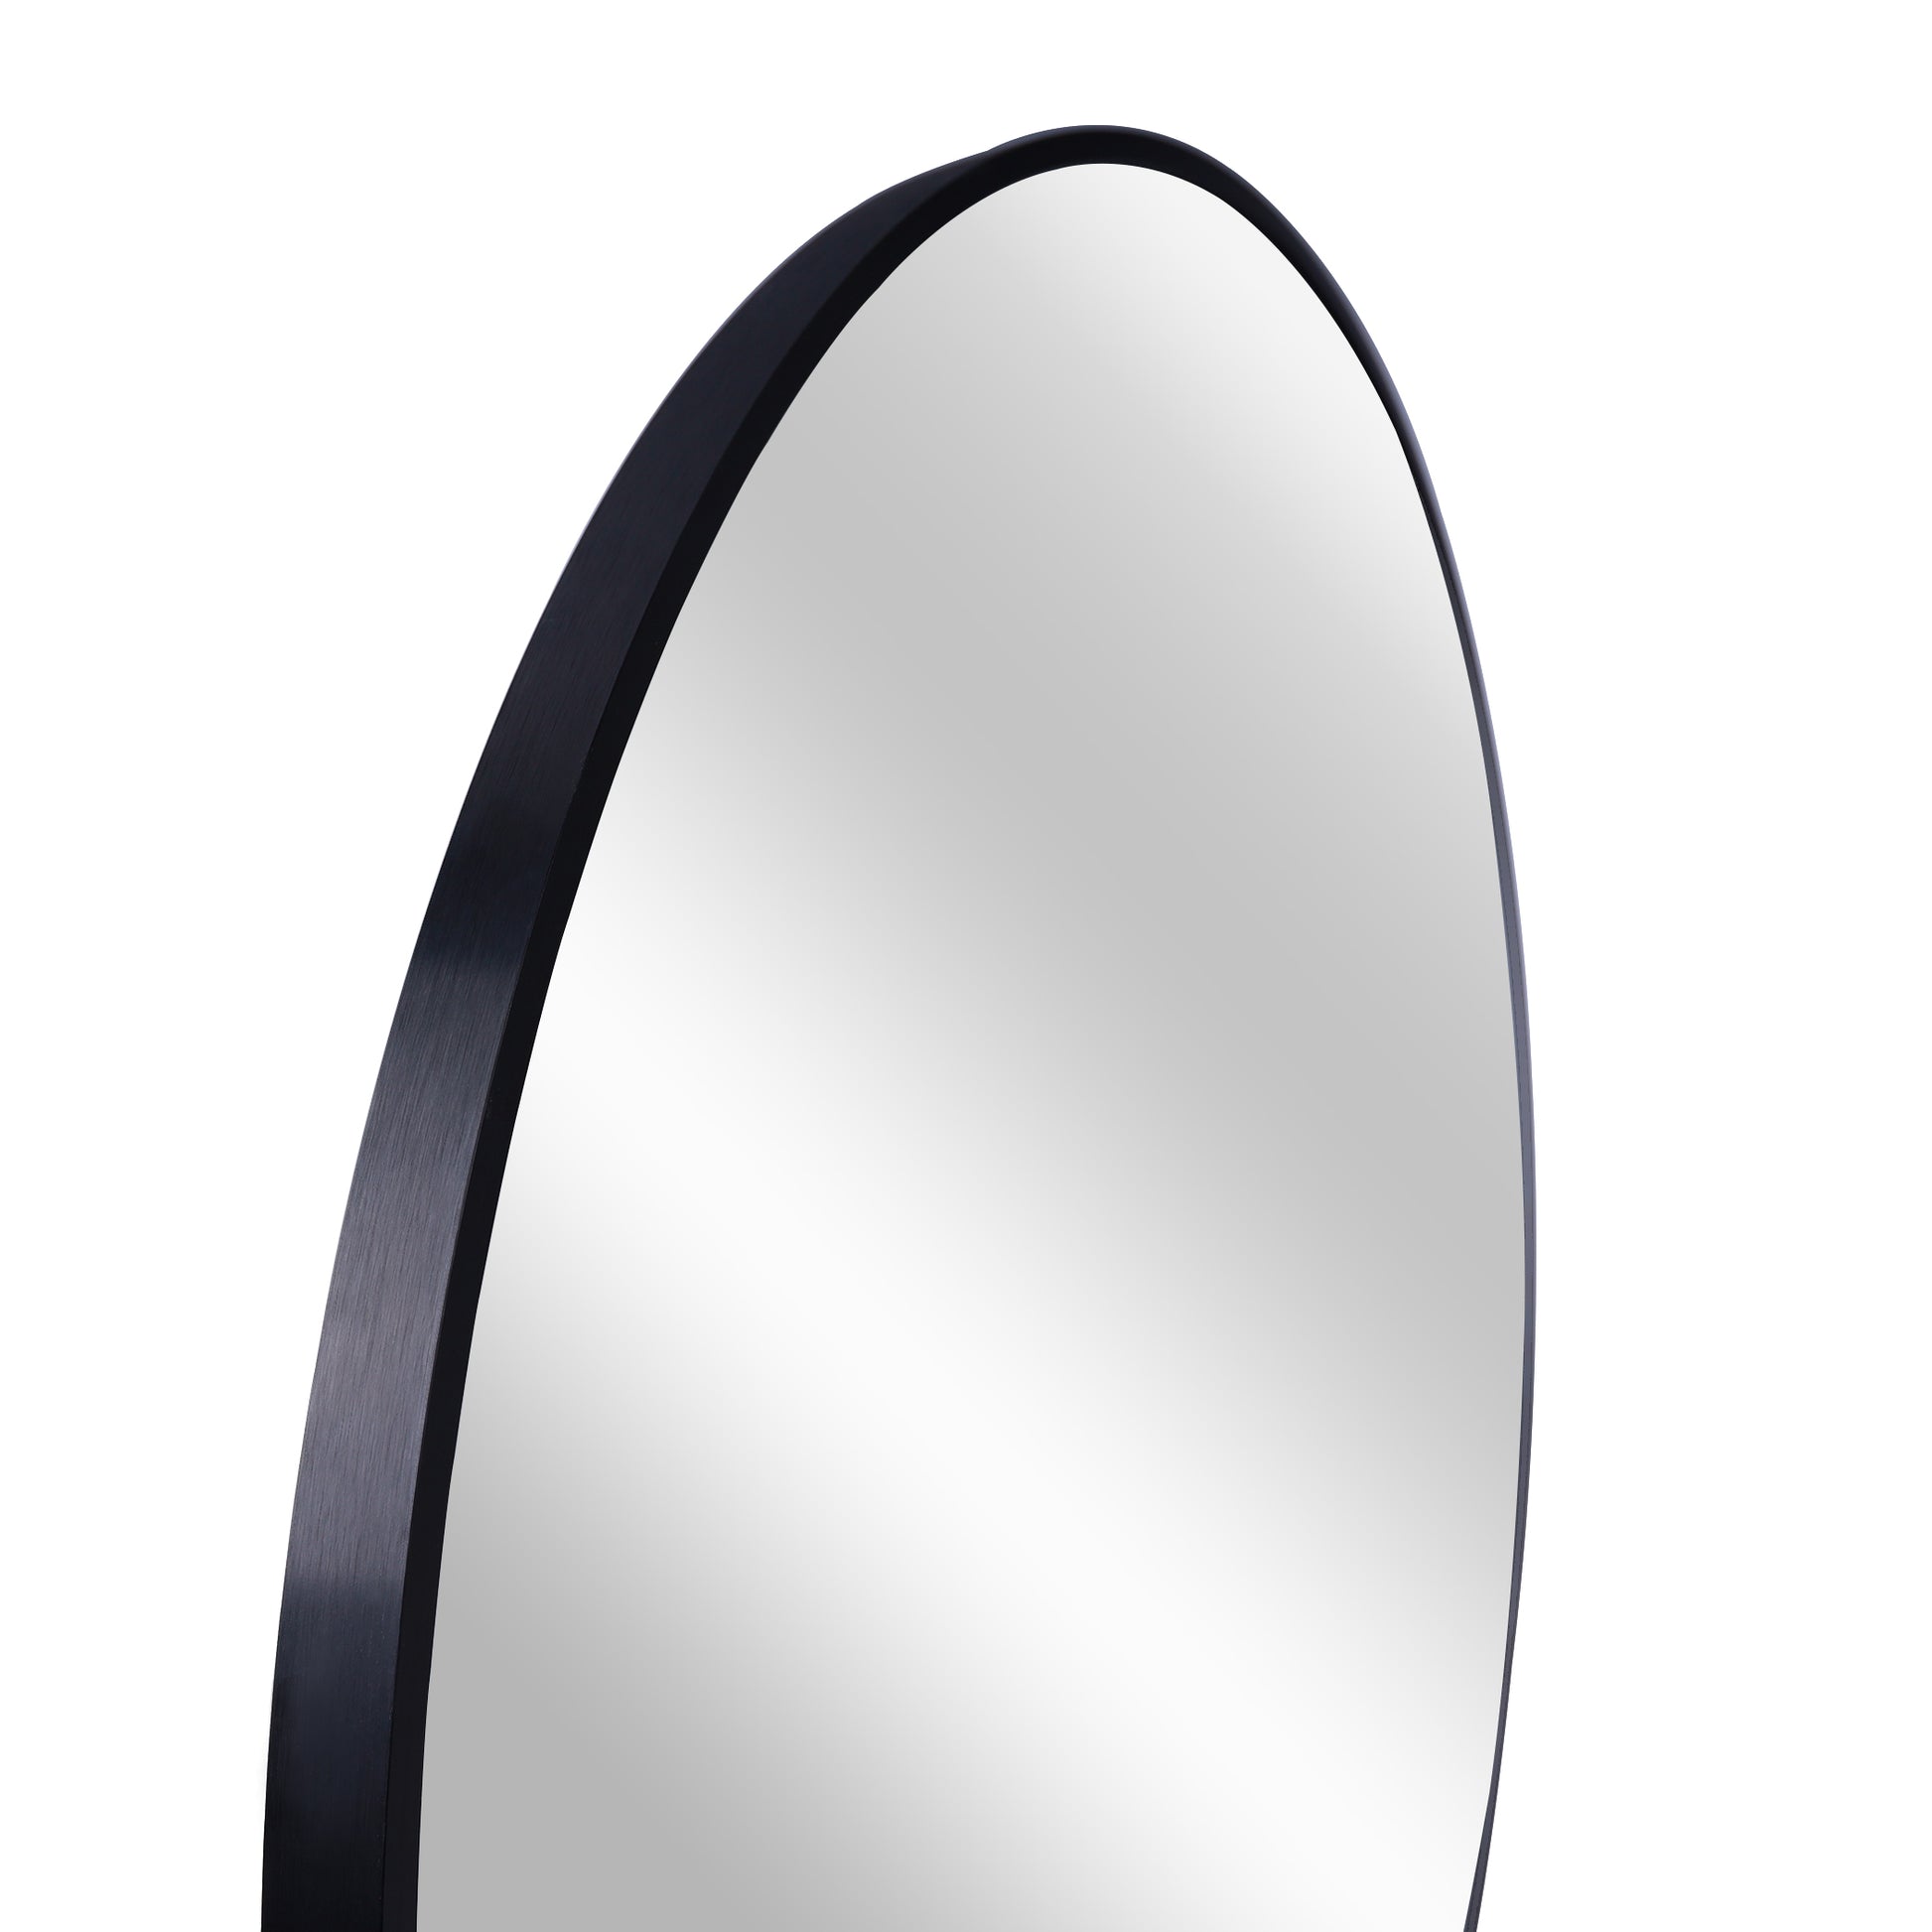 Black 32 Inch Metal Round Bathroom Mirror black-classic-mdf+glass-aluminium alloy